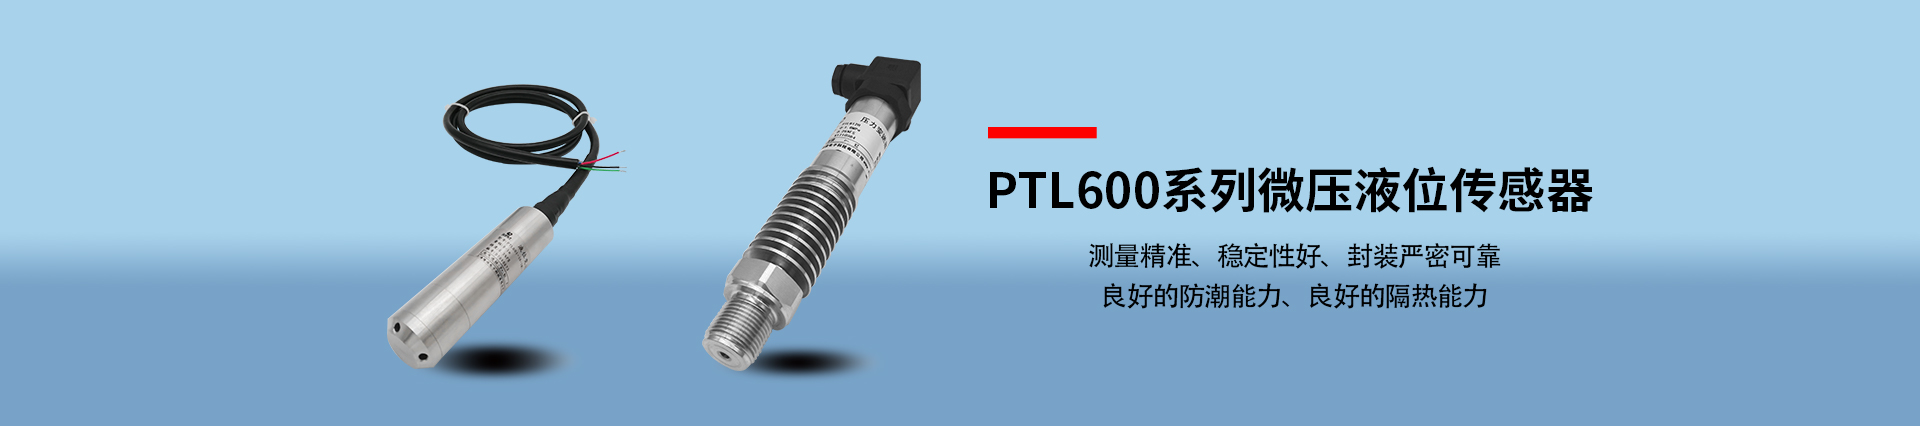 PTL600系列微压液位传感器